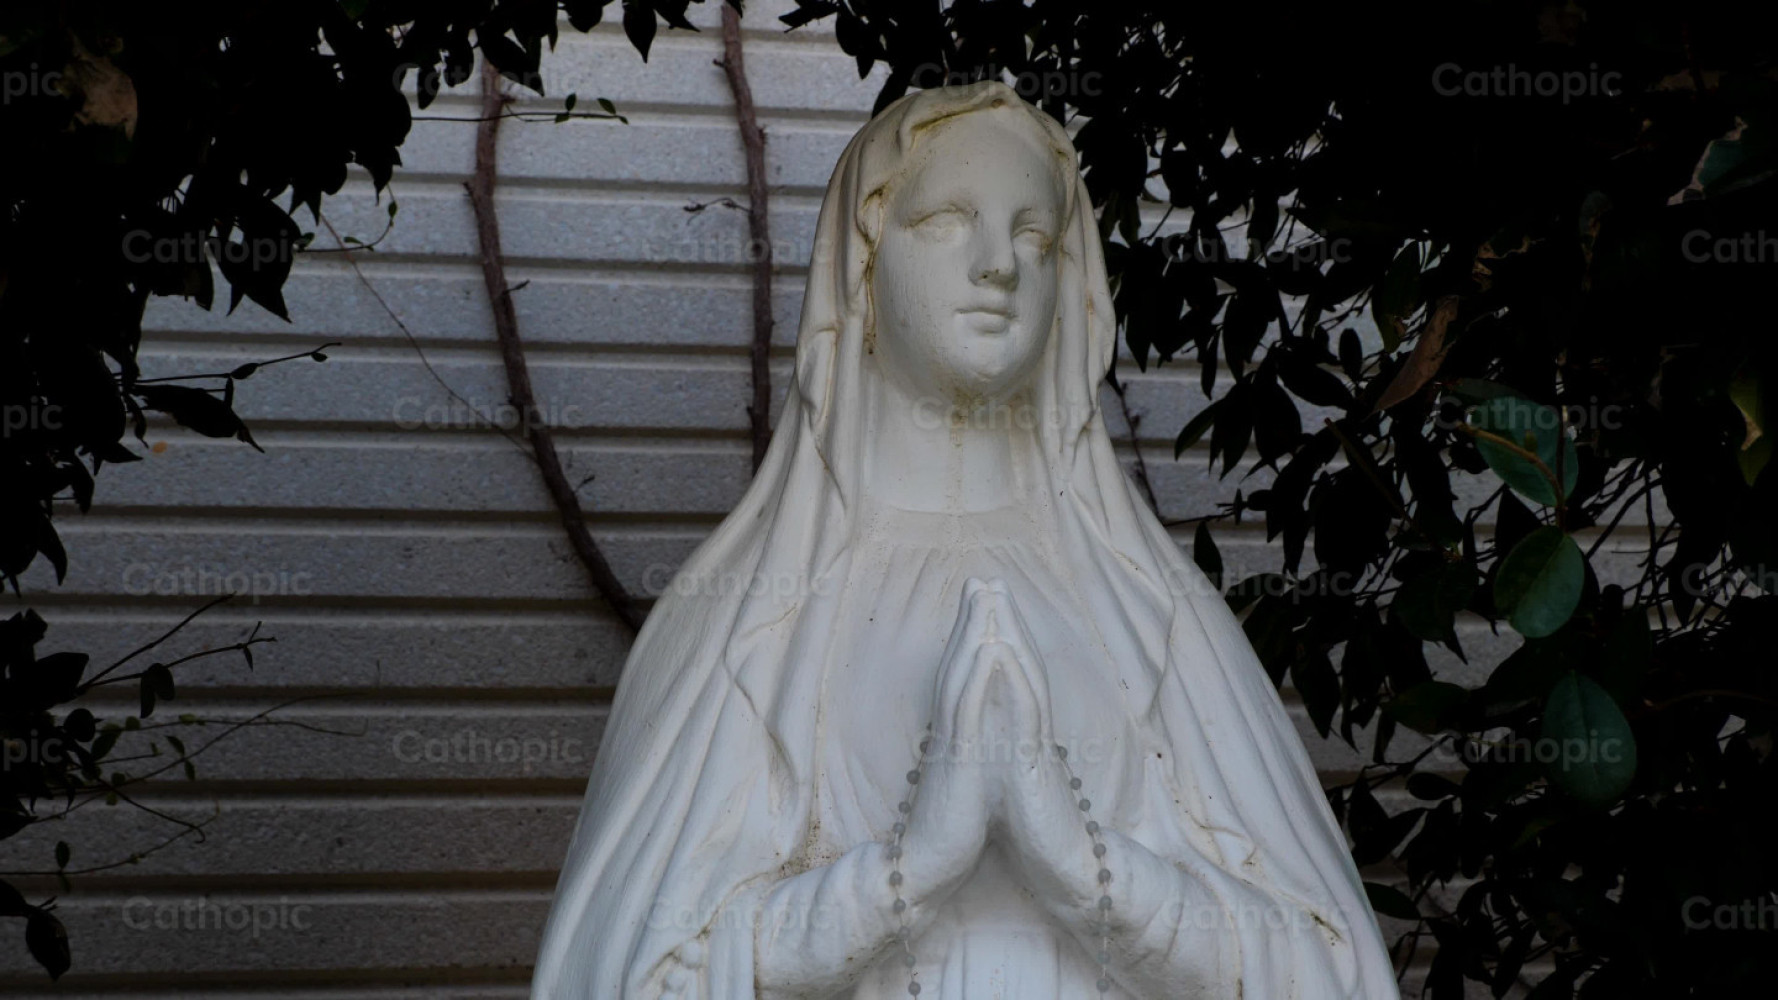 Five Ways to Approach Jesus Through Mary  Arte católico, Vitrales, Virgen  maría